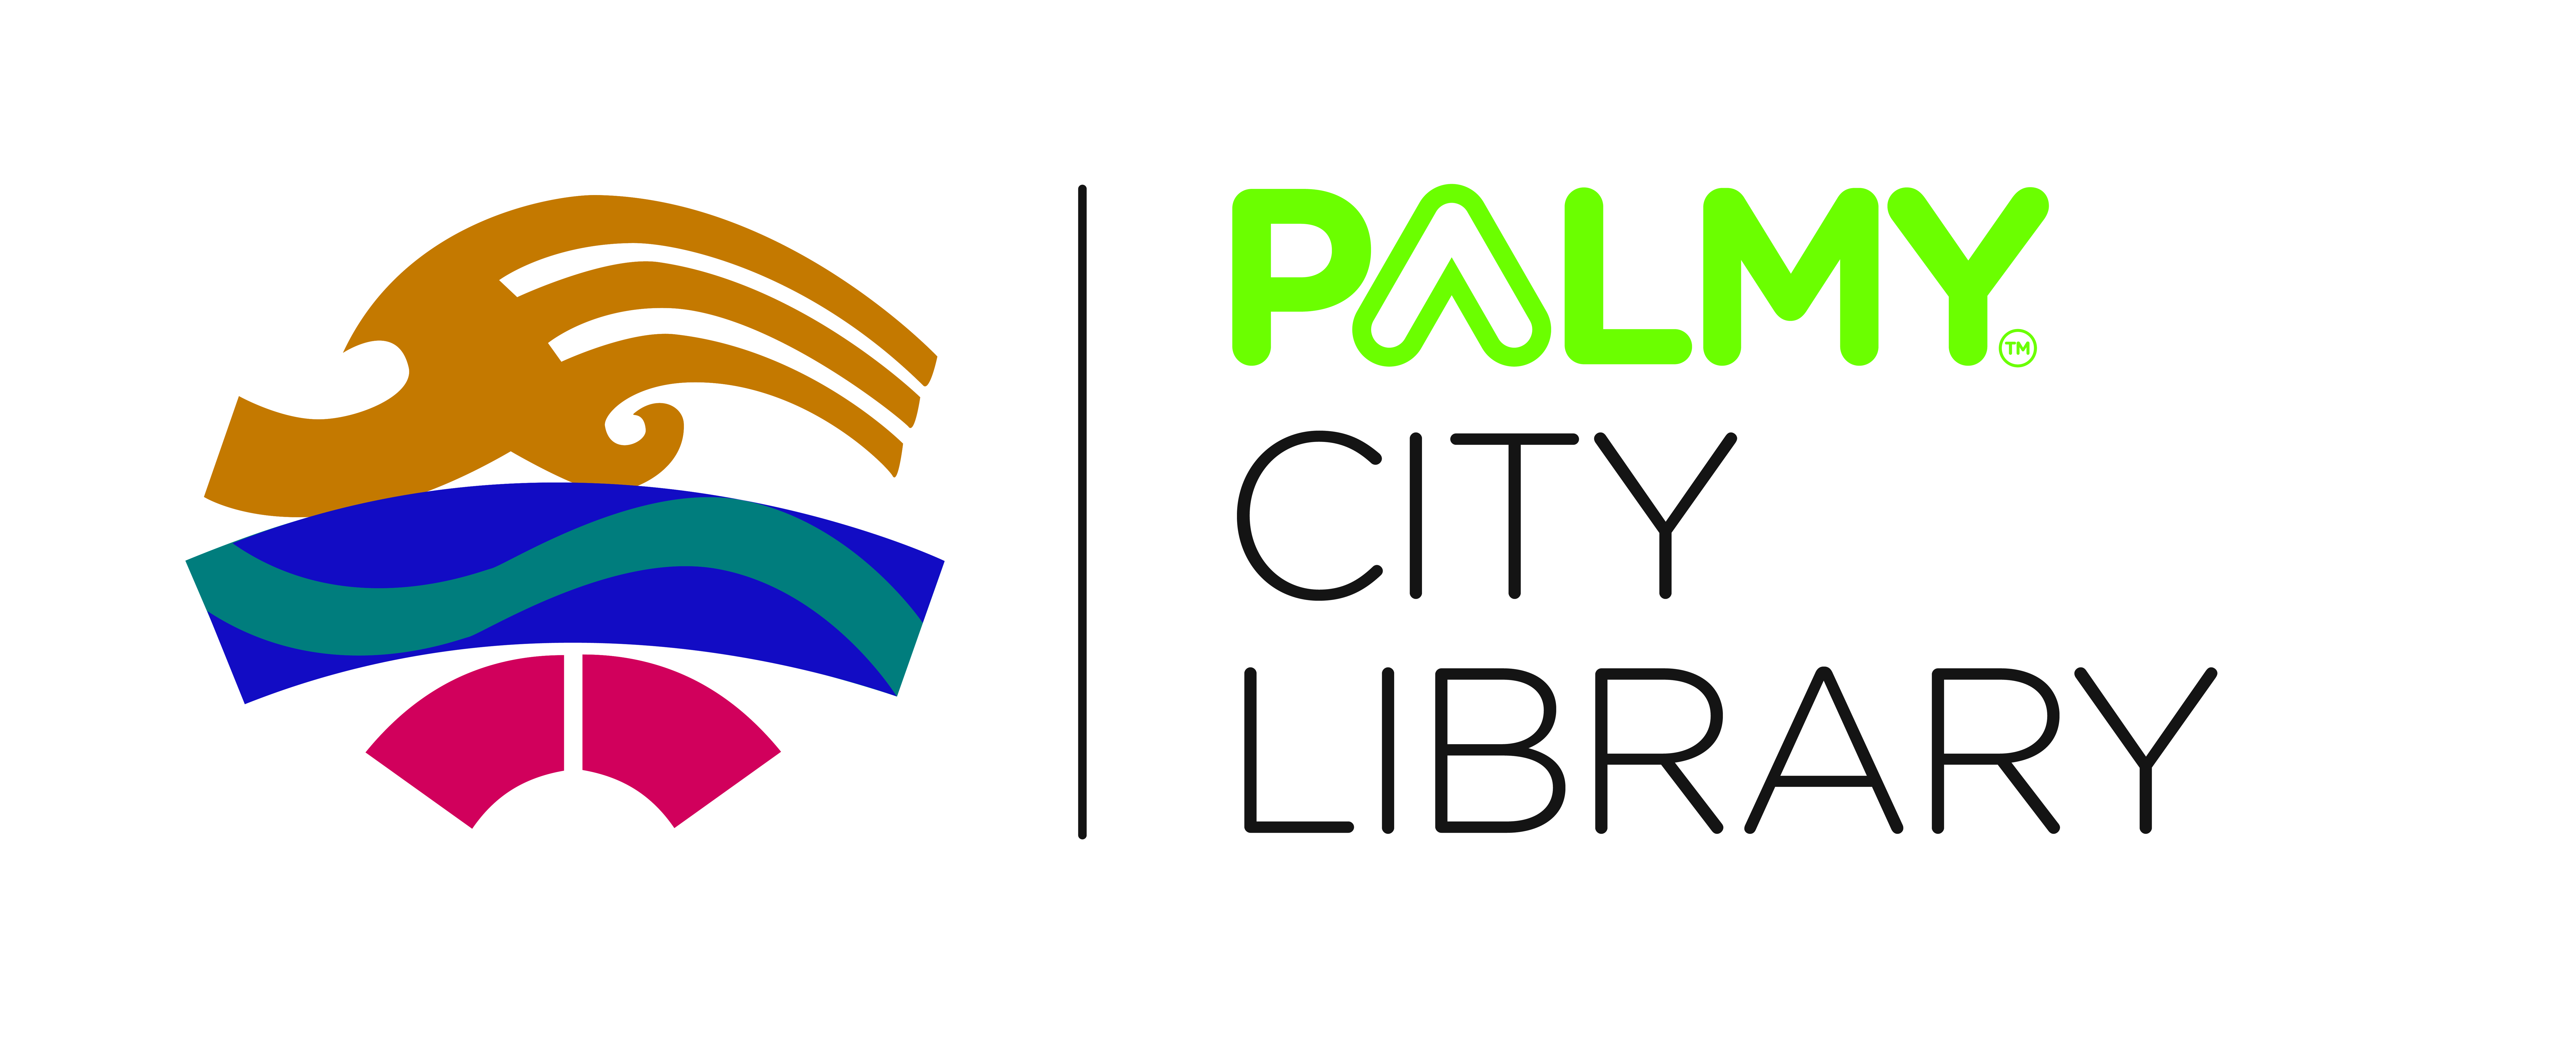 Library Logos_CMYK_Palmy City Library.jpg